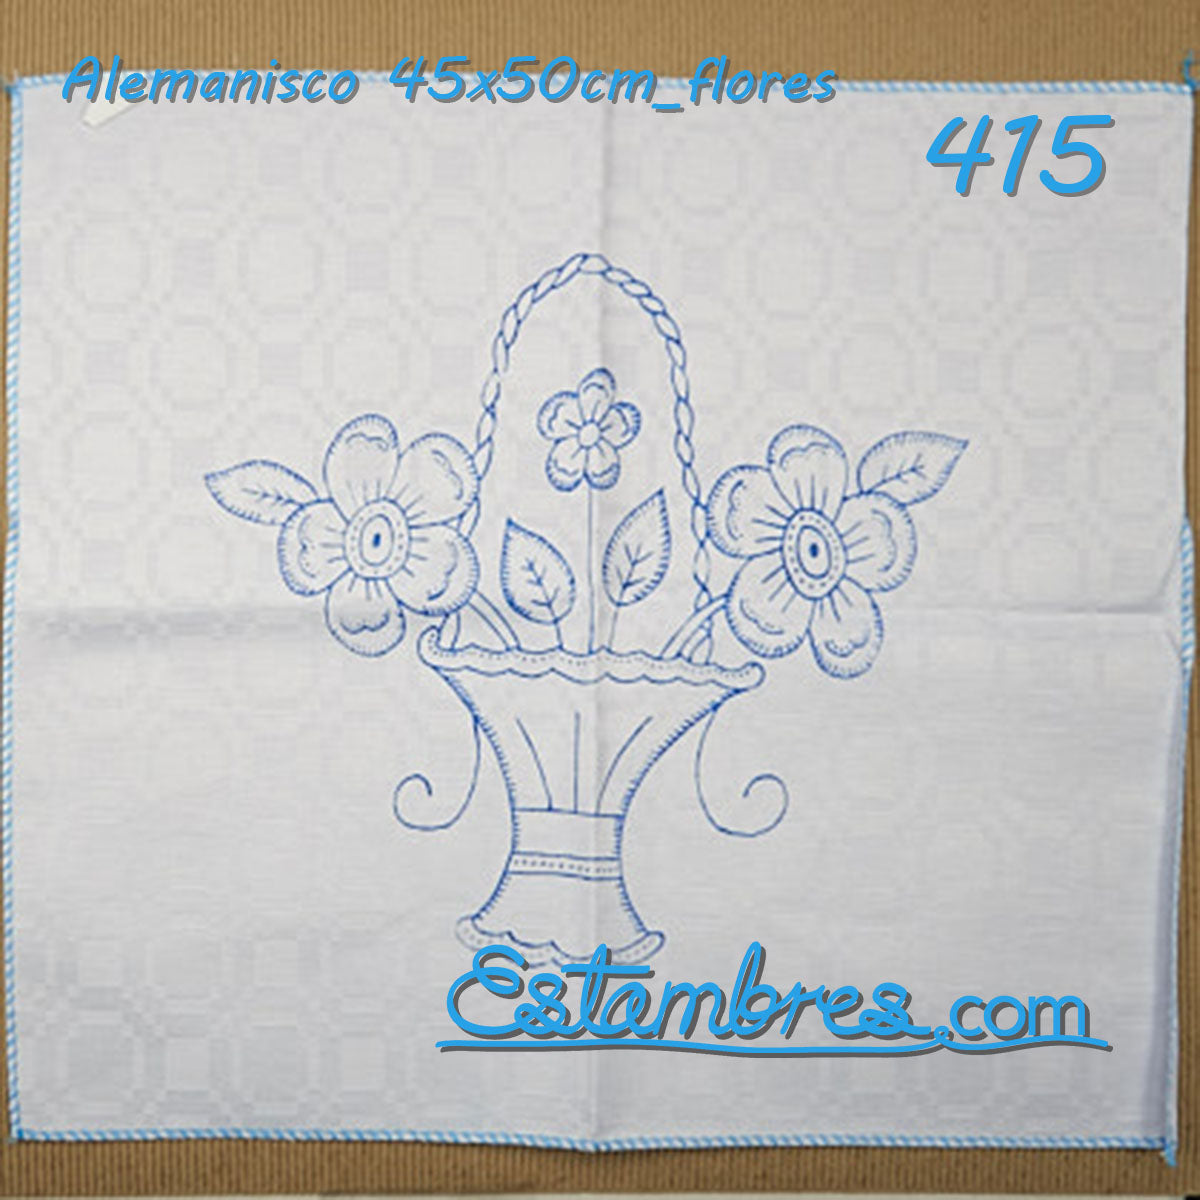 FLORES - Alemanisco [45x50cm]